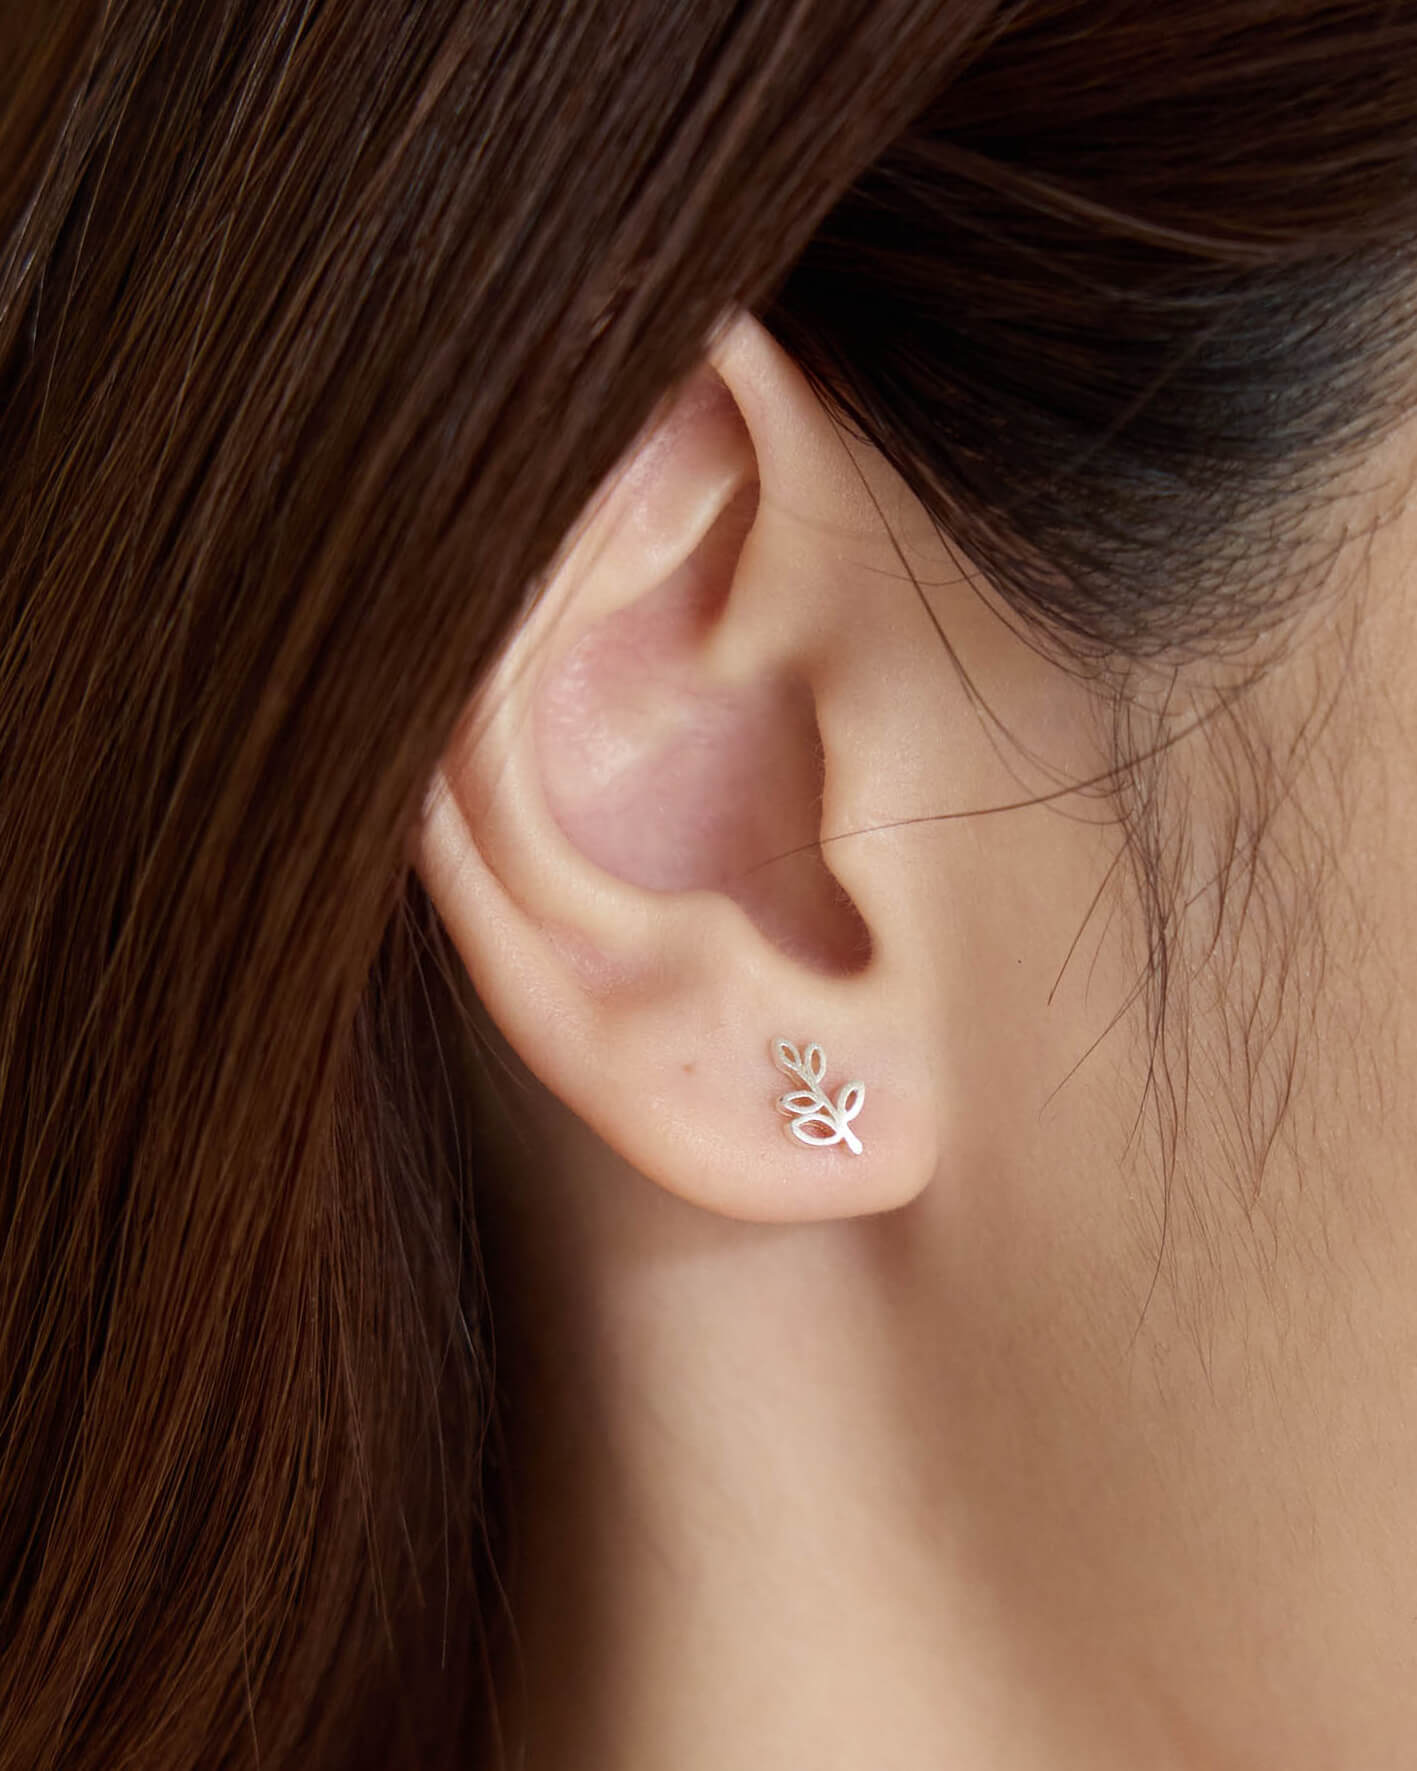 Eco安珂,韓國飾品,韓國耳環,韓國925純銀耳環,925純銀耳環,簡約耳環,貼耳耳環,氣質耳環,小耳環